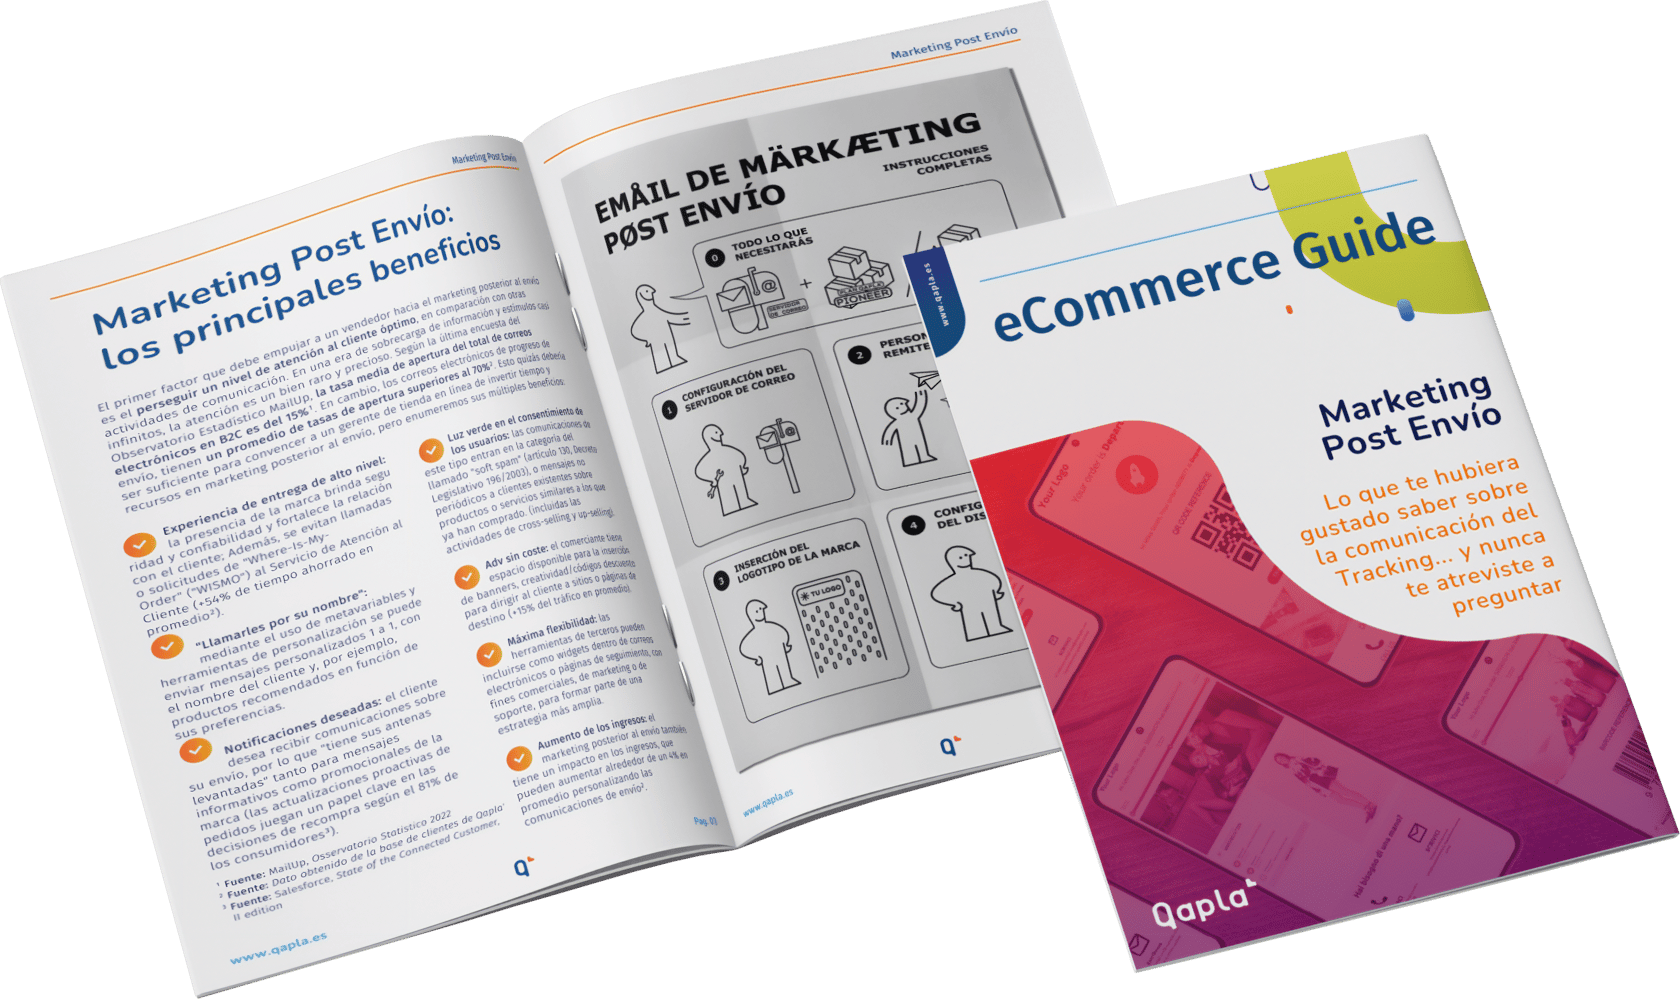 eCommerce Guide Qapla' - Marketing Post Envío